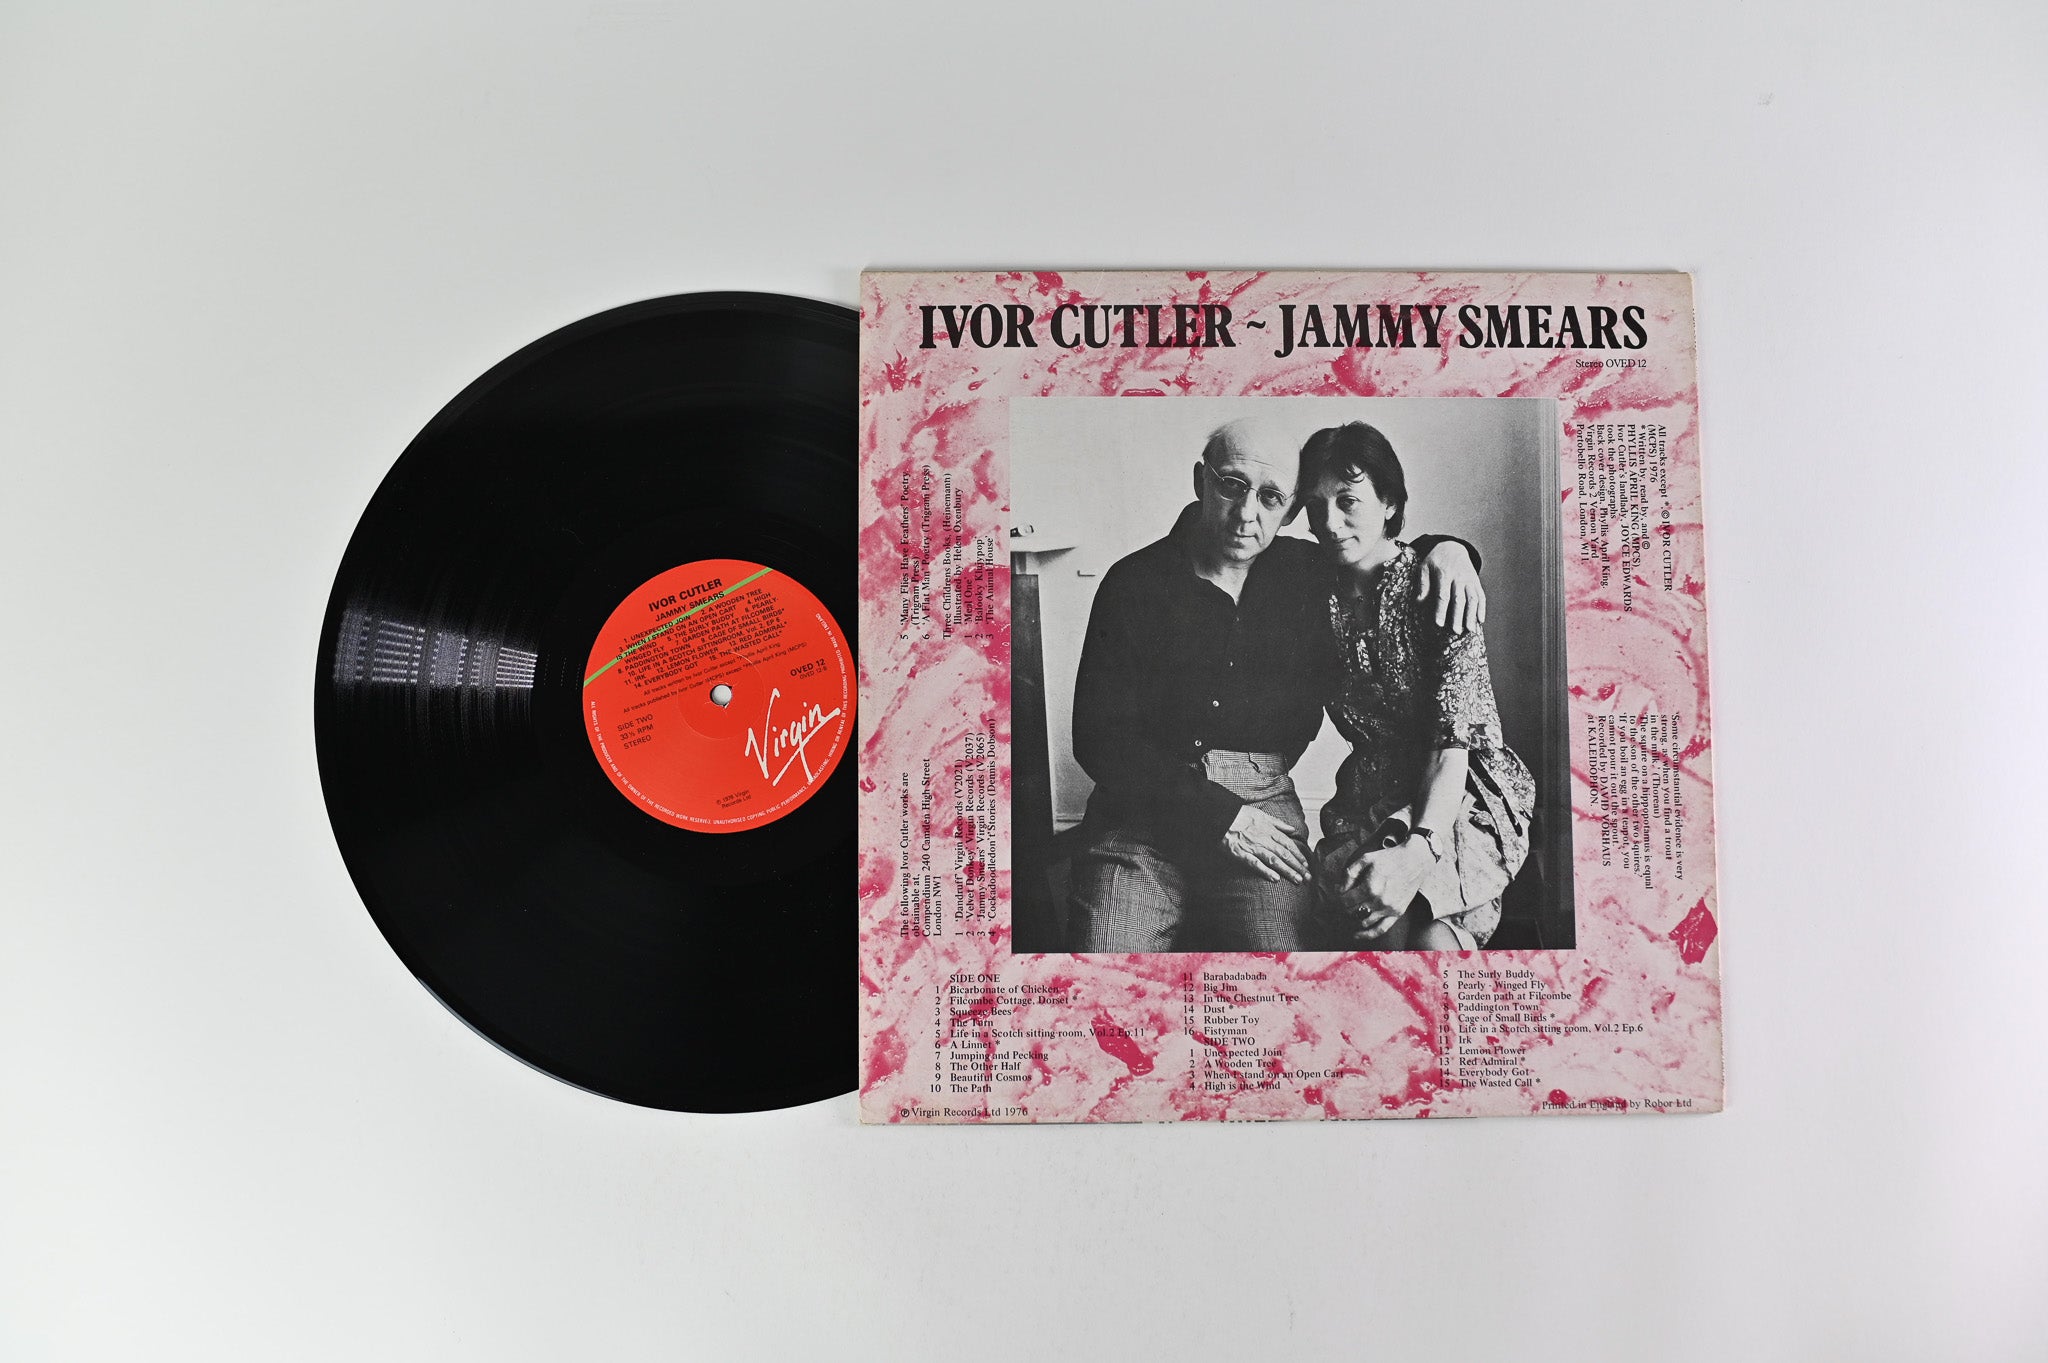 Ivor Cutler - Jammy Smears on Virgin UK Press Reissue